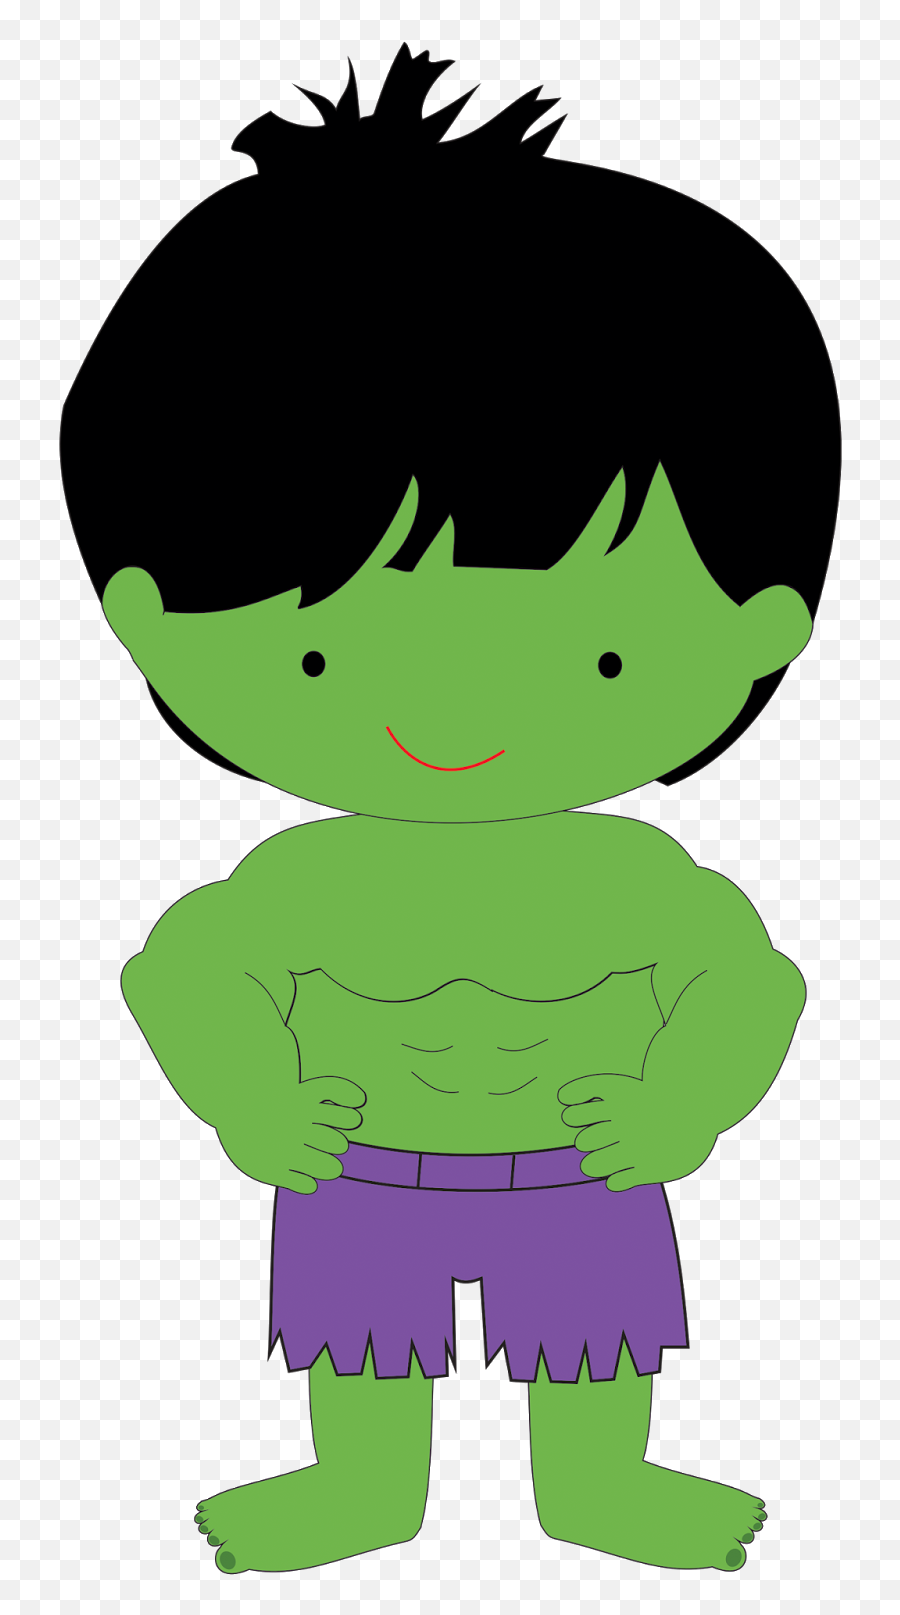 Baby Hulk Wallpapers - Top Free Baby Hulk Backgrounds Emoji,Hulk Smash Animated Emoticon